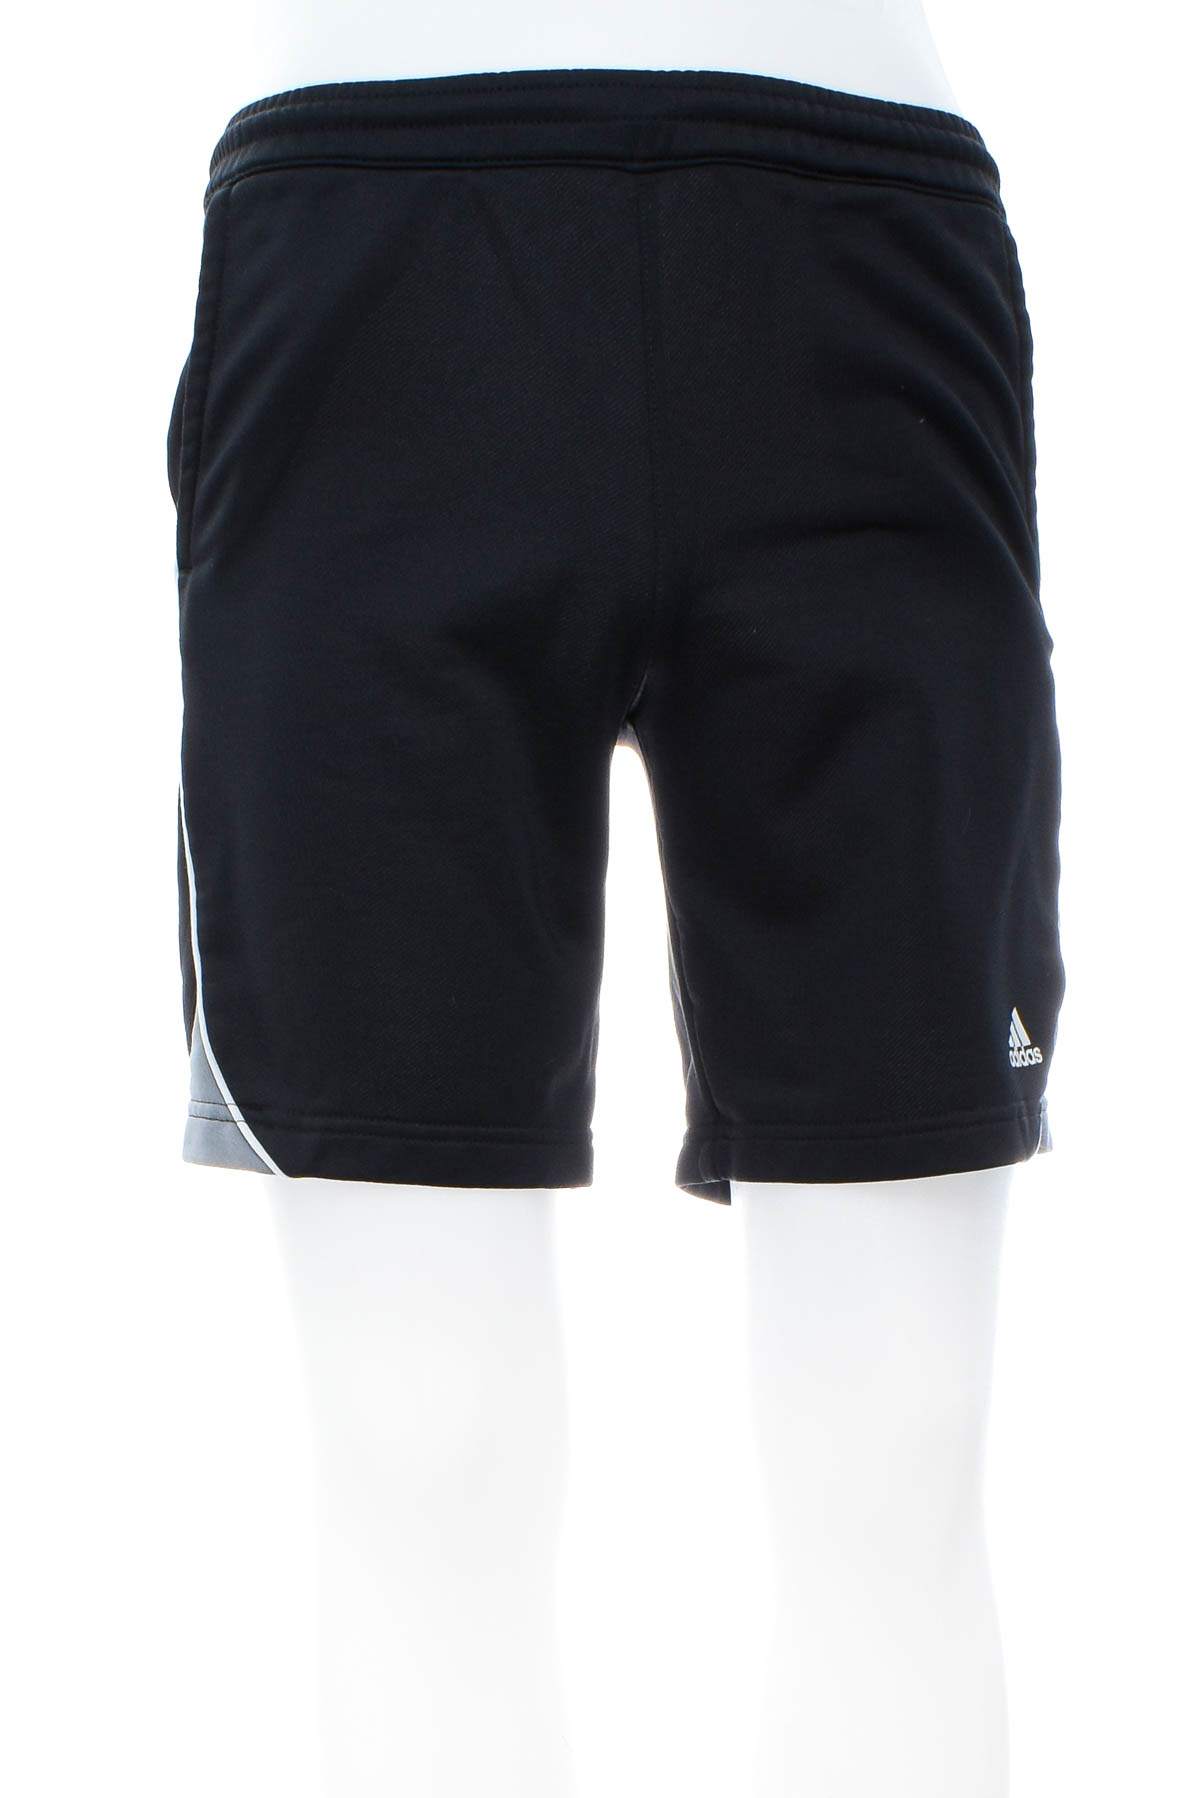 Shorts for boys - Adidas - 0